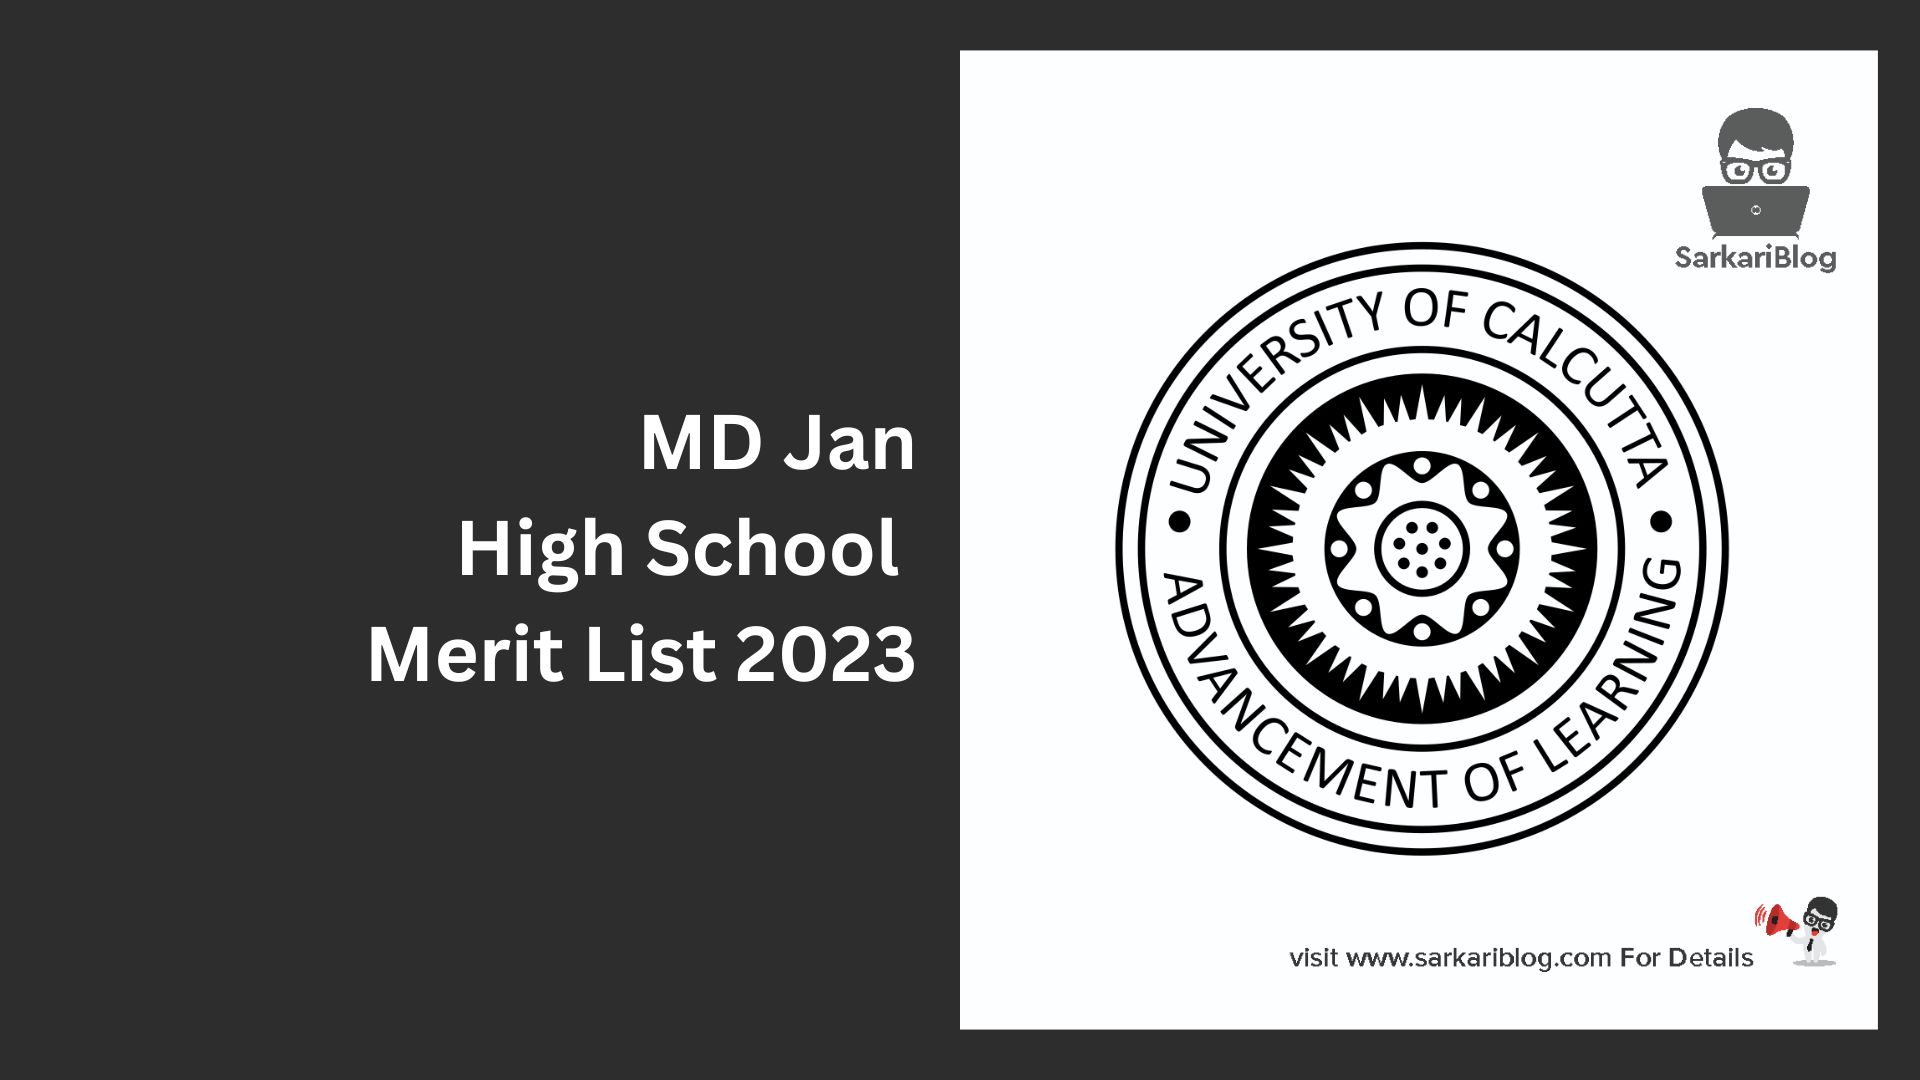 MD Jan High School Merit List 2023